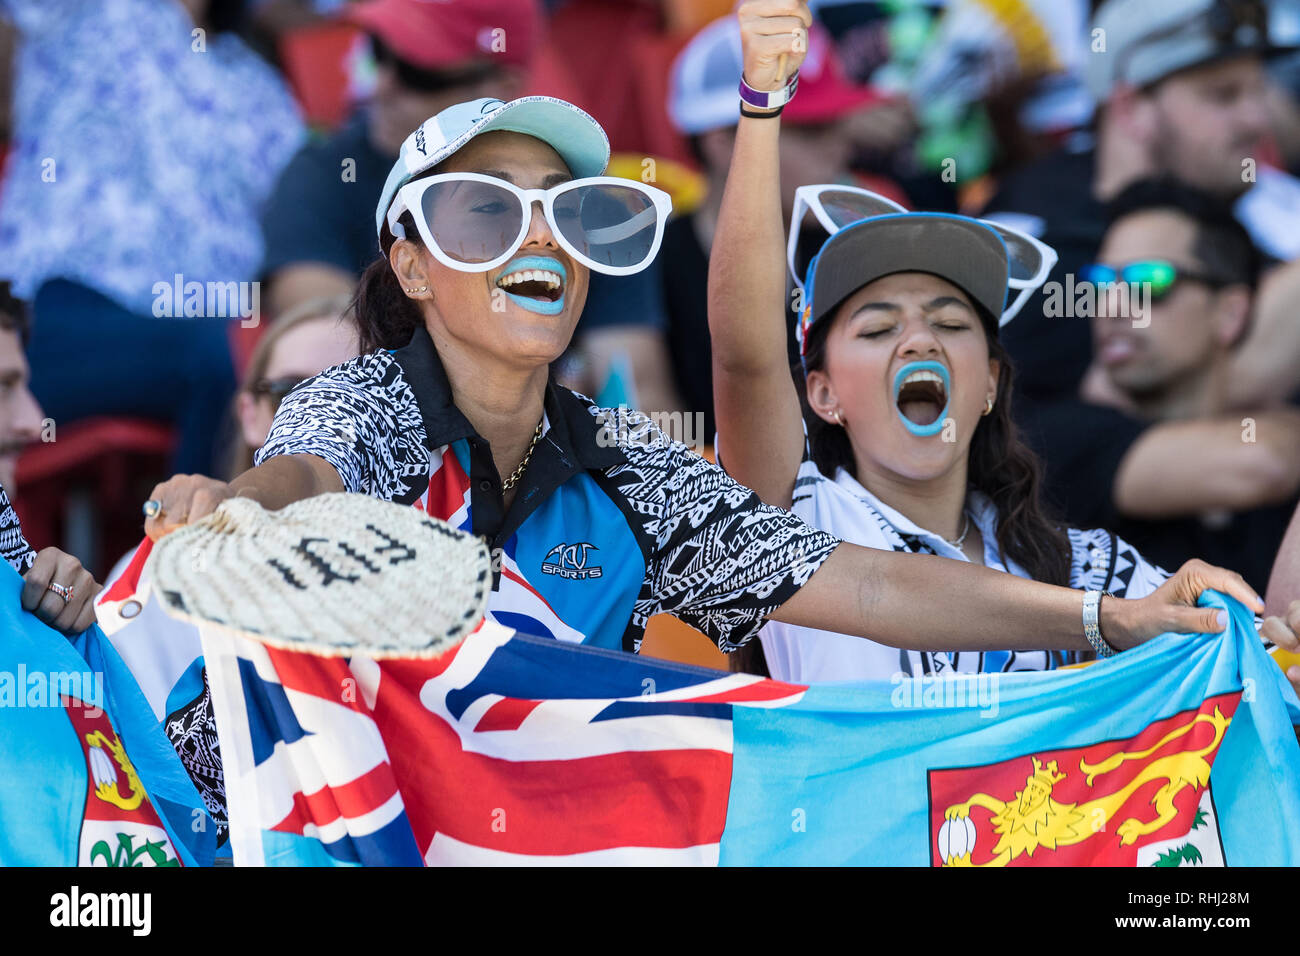 Sydney, Australien. 3. Feb 2019. Fidschi Fans während der 2019 HSBC Sydney 7s im Sydney Olympic Park, Sydney, Australien, am 3. Februar 2019. Foto von Peter Dovgan. Credit: UK Sport Pics Ltd/Alamy leben Nachrichten Stockfoto